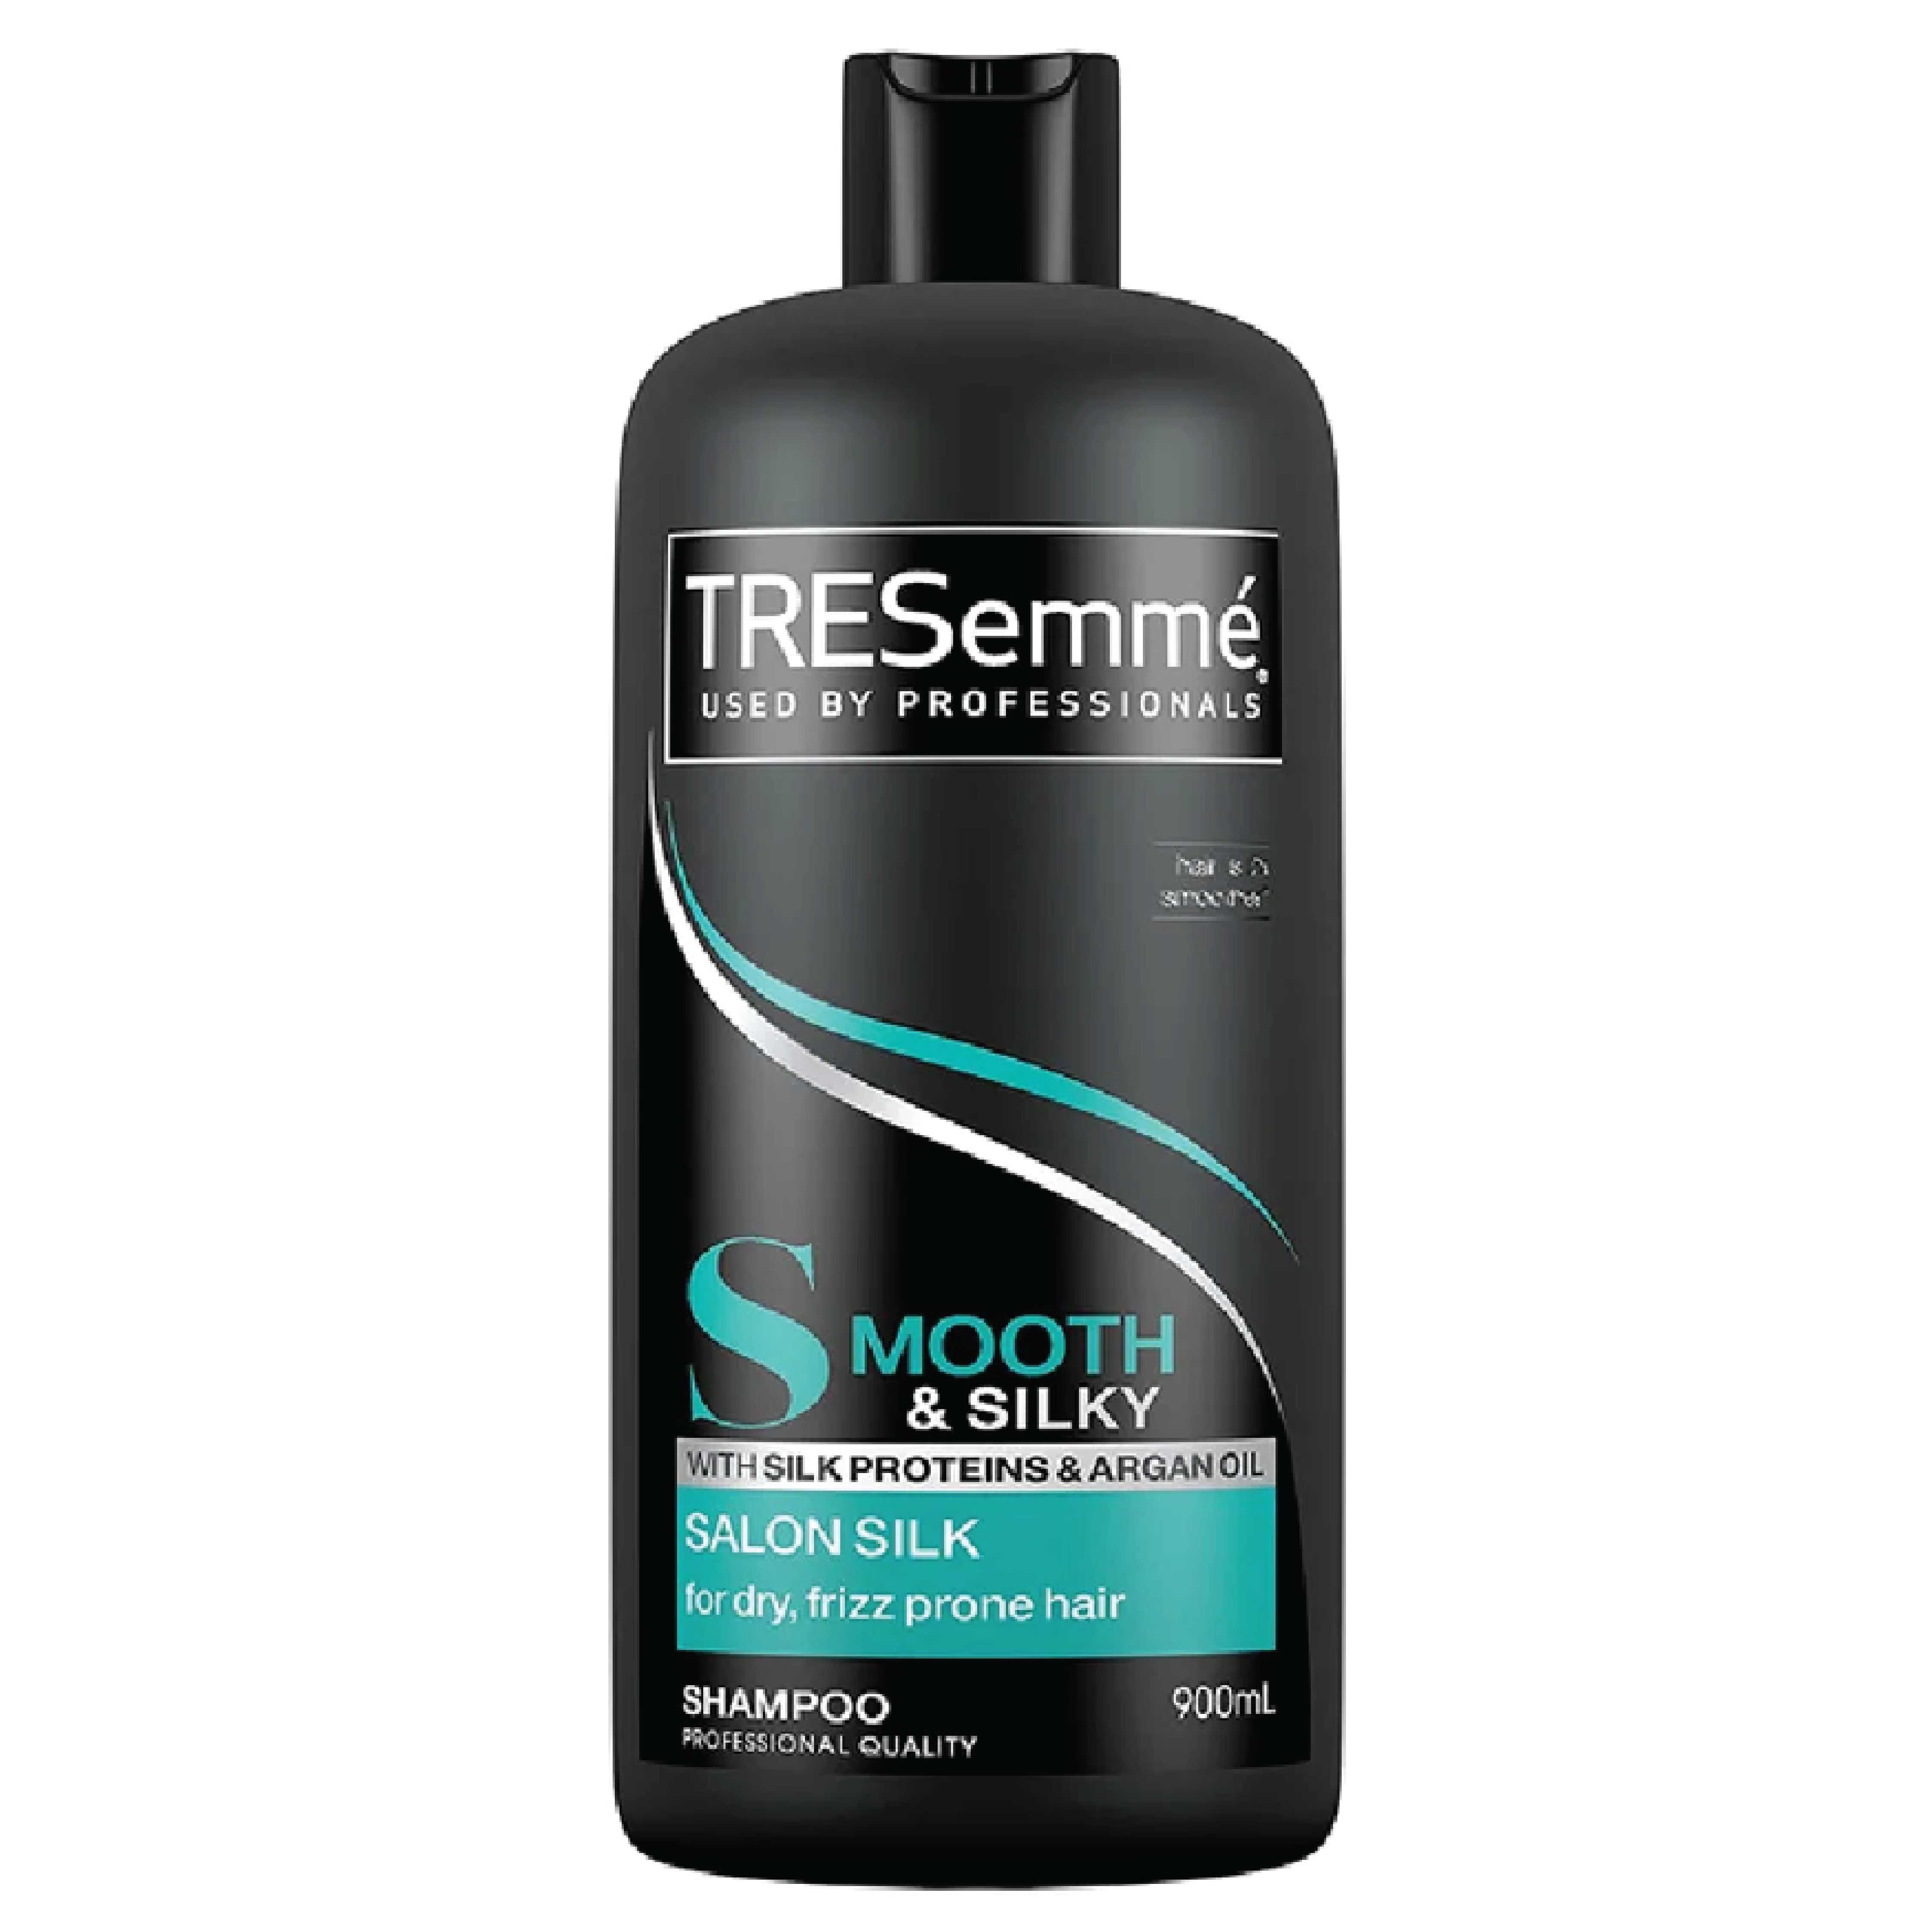 TreSemme' Smooth & Silky Salon Silk Shampoo 900ml